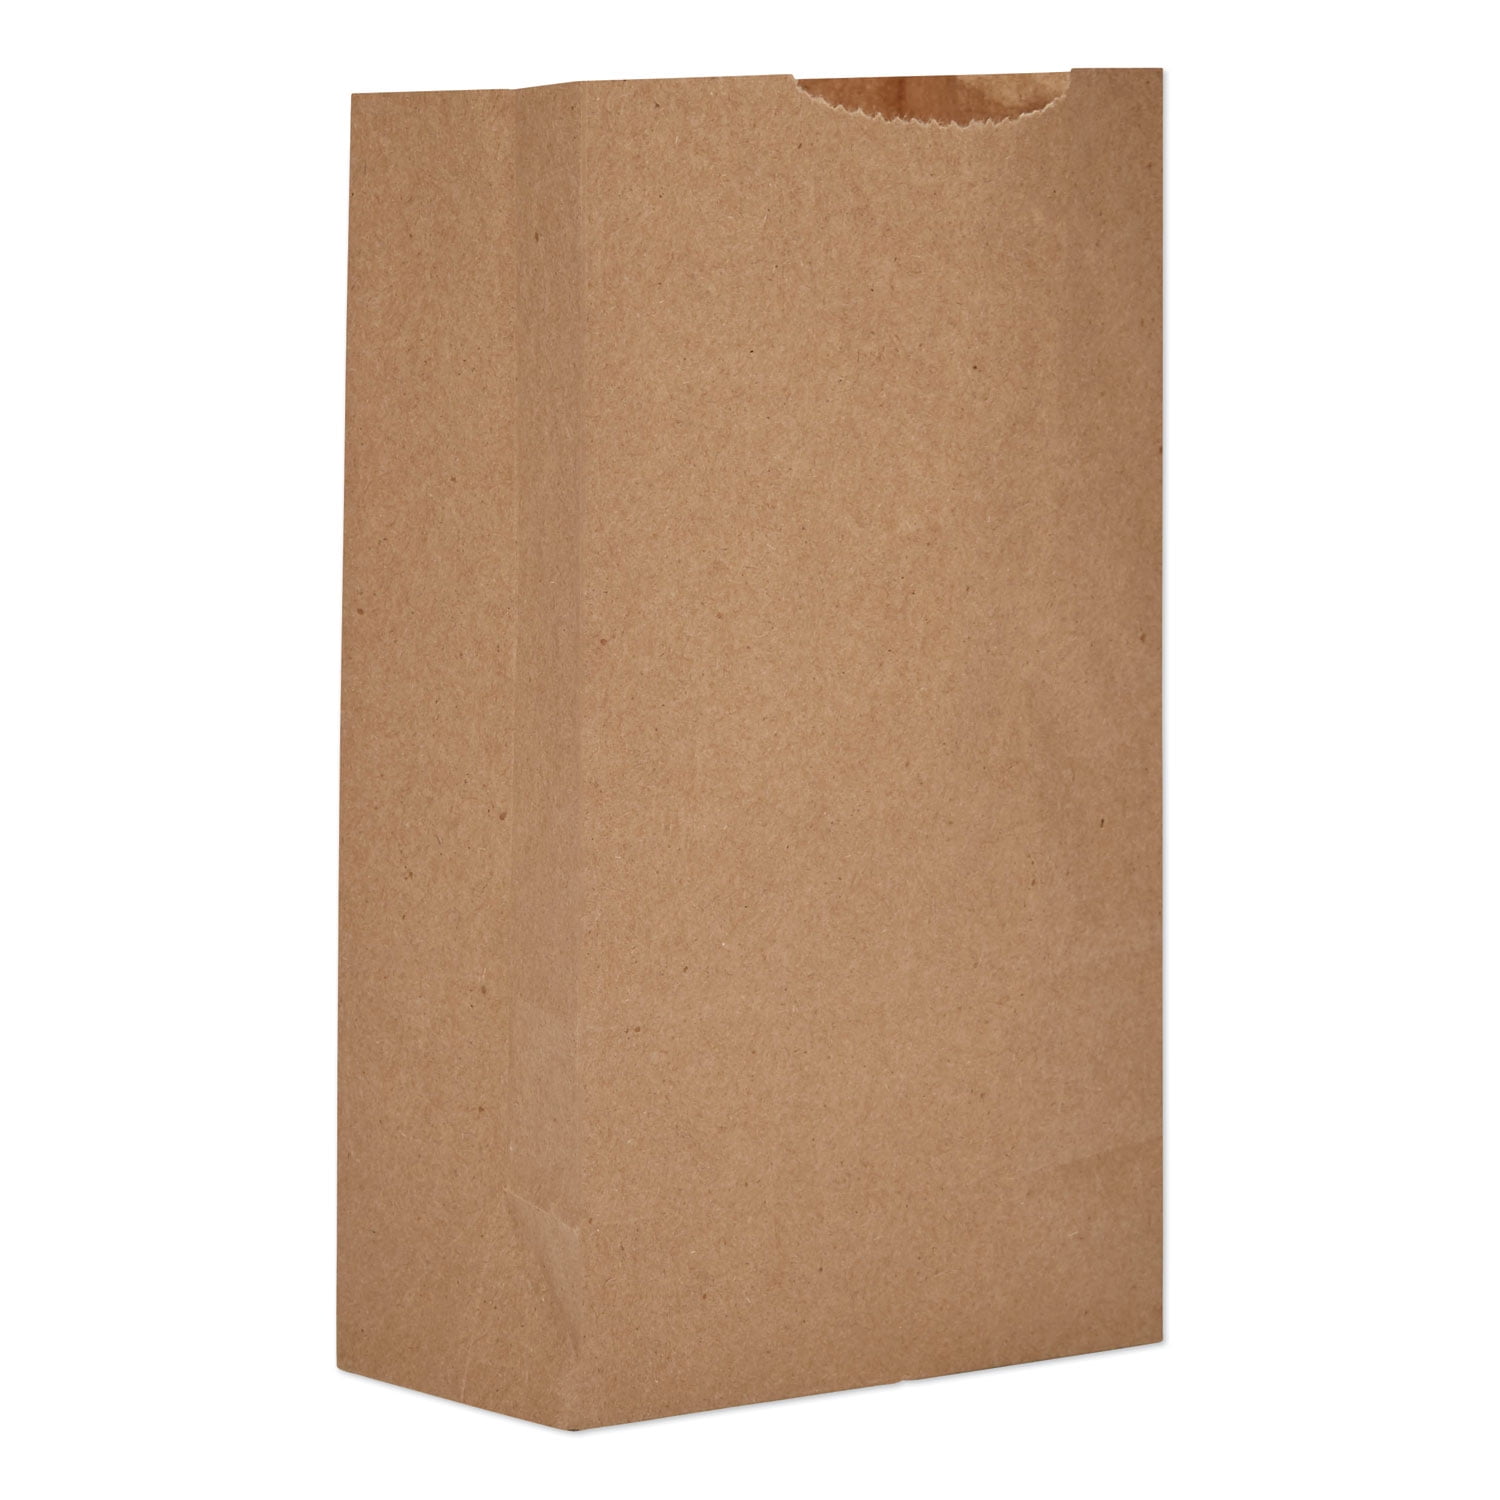 Paper Grocery Bags Sack Lunch Merchandise Duro Bag #4 Brown Kraft 500 ct